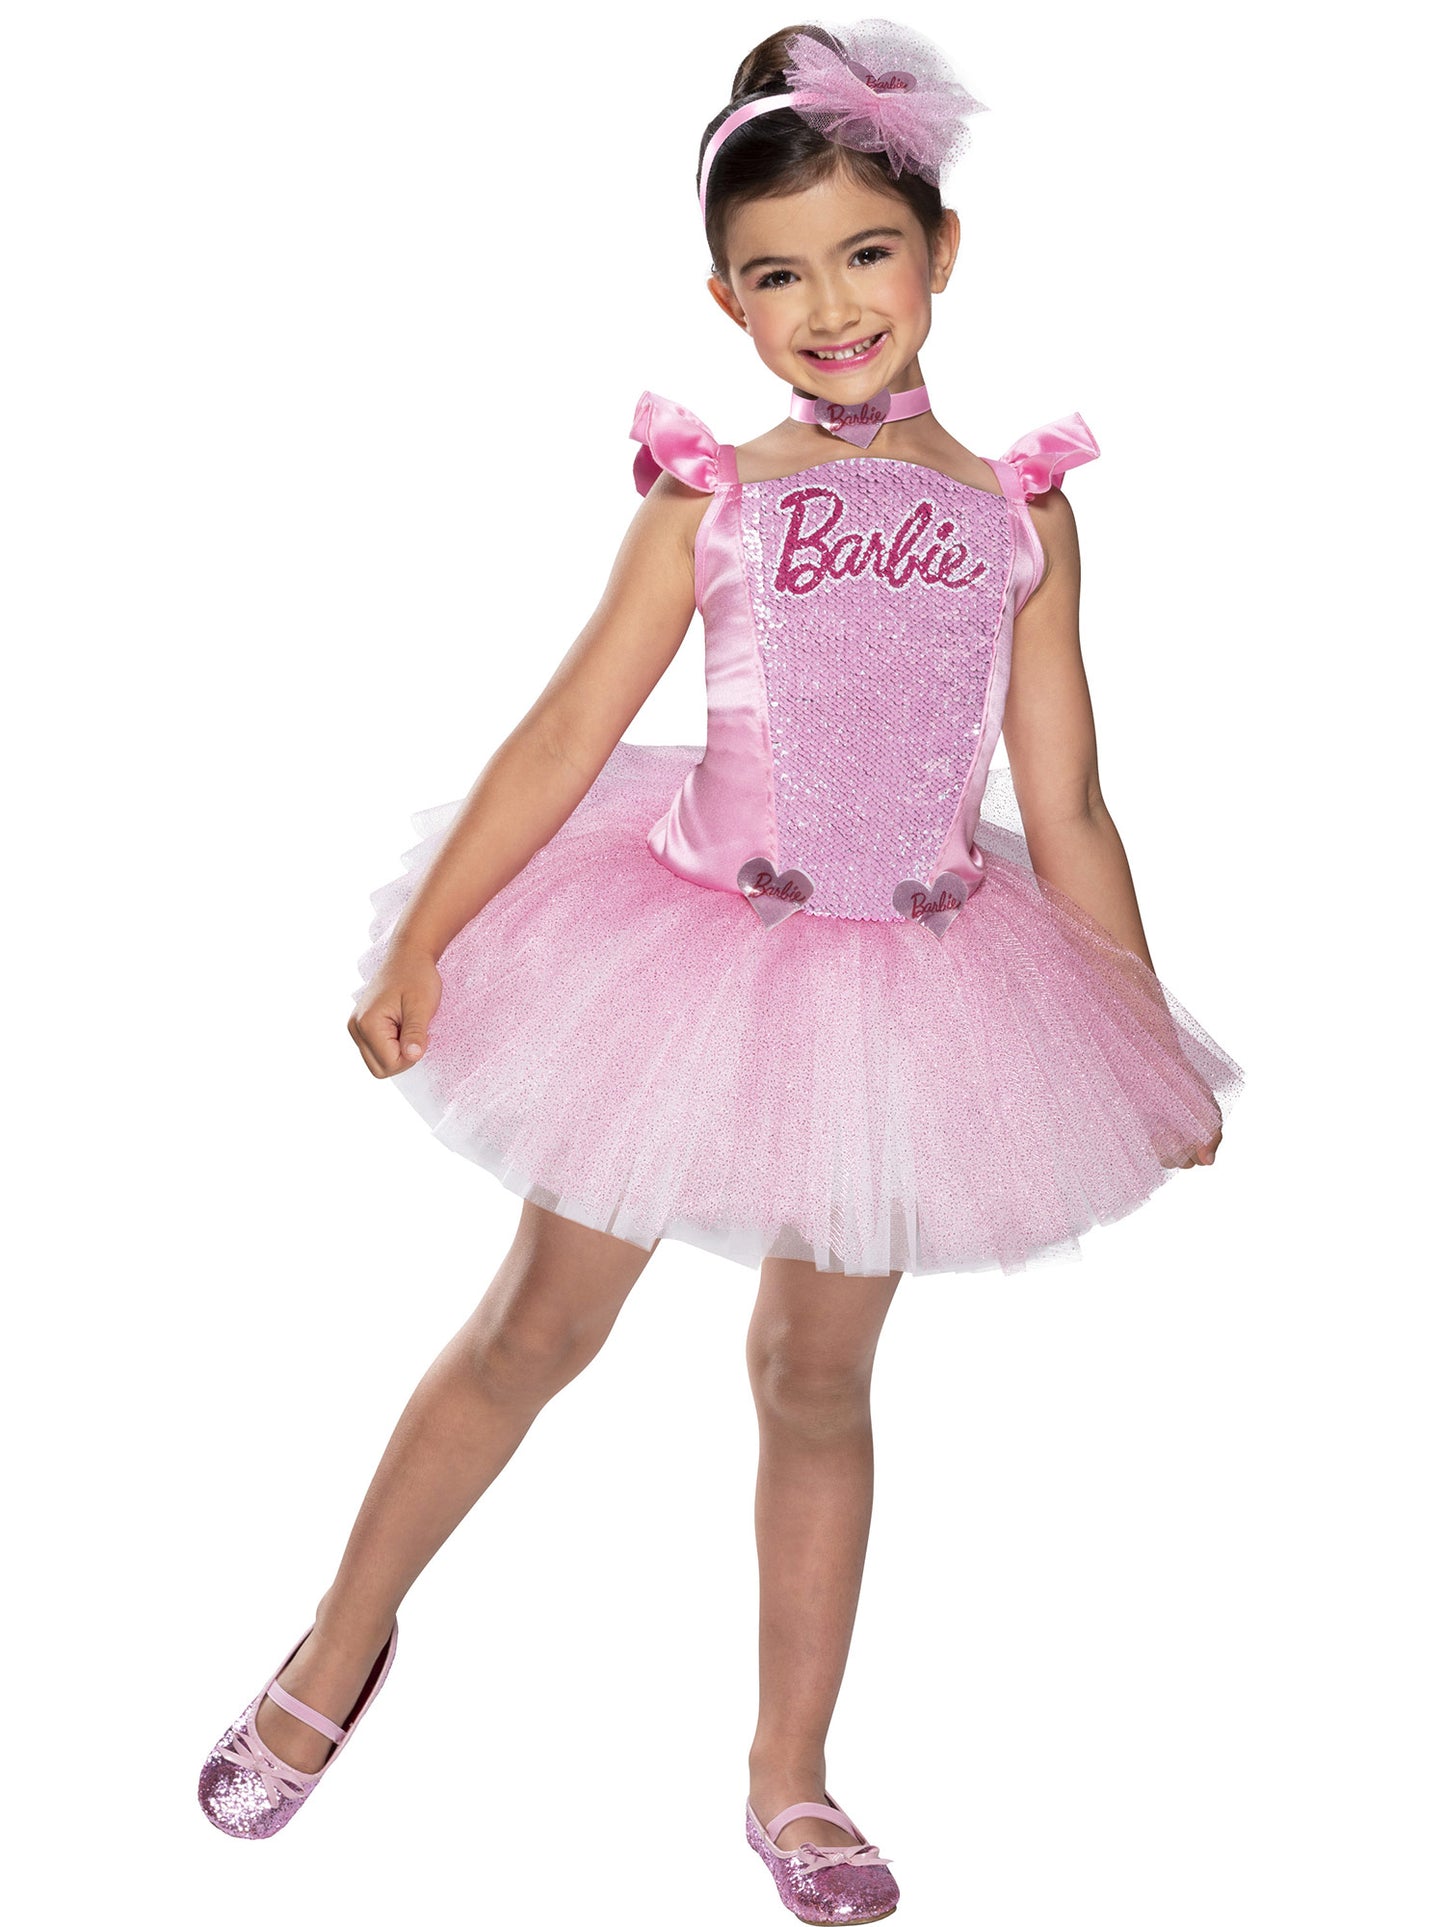 Rubie's Official Licensed Mattel Barbie Ballerina Child Costume